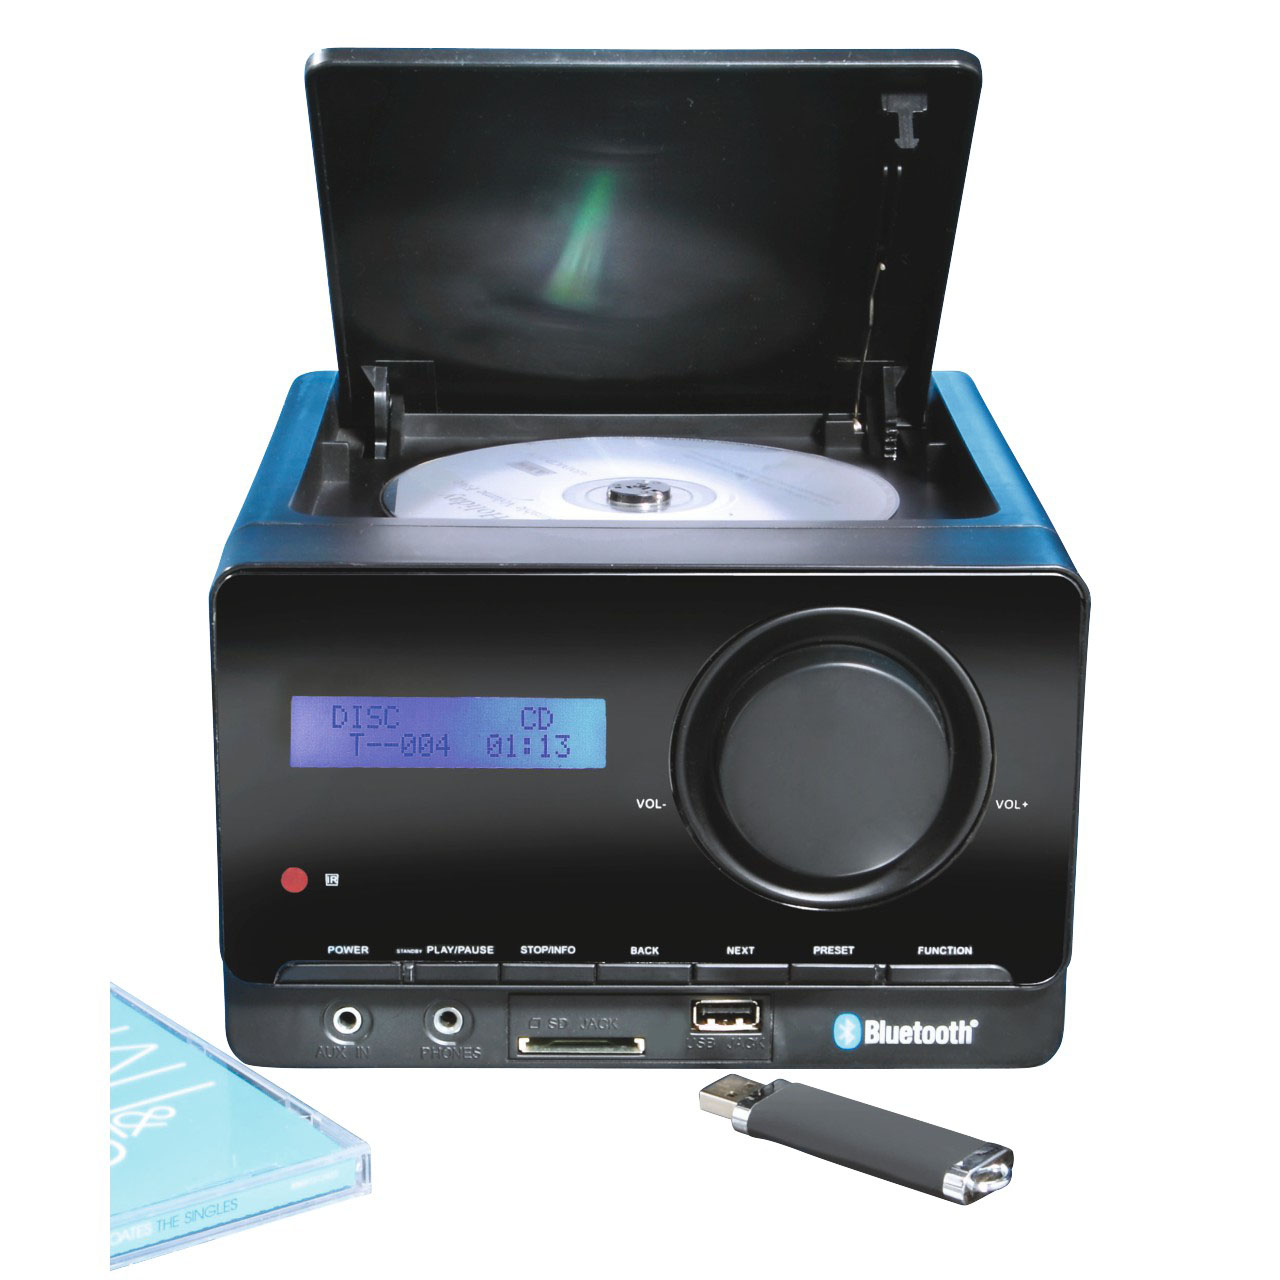 Akai Micro Hi-Fi Music System with DAB Radio and Bluetooth